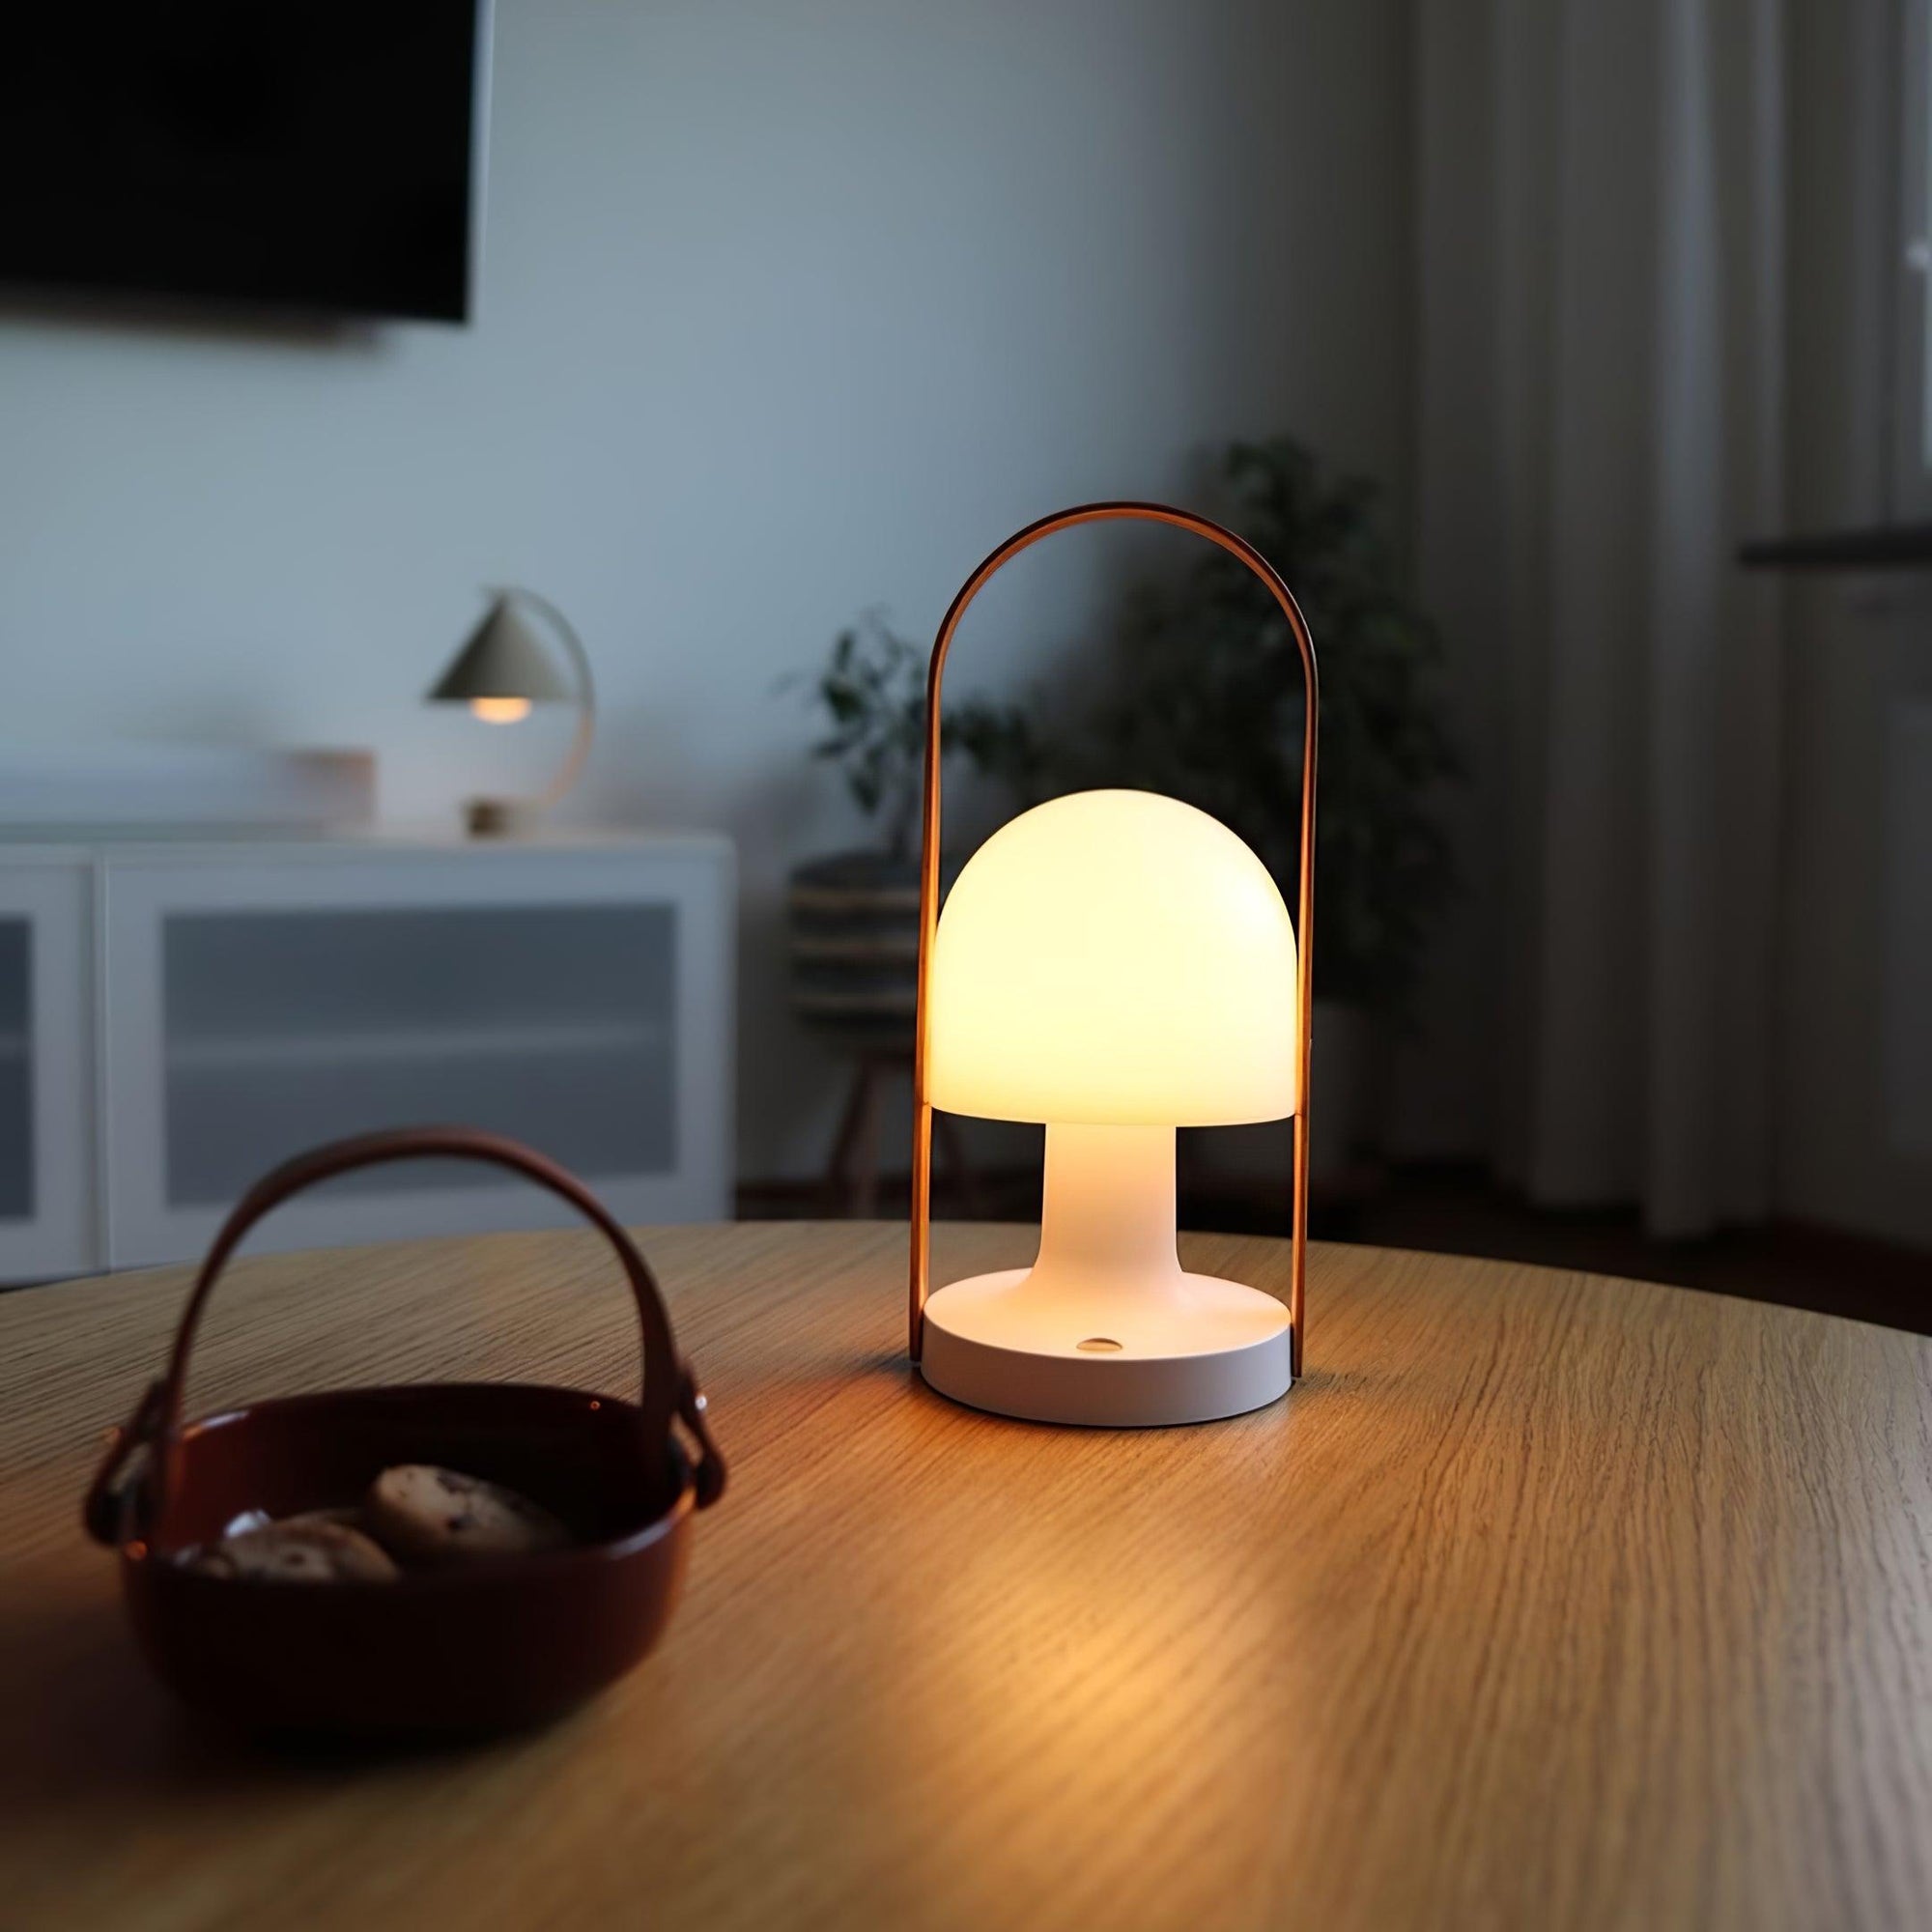 FollowMe Portable Table Lamp (built-in battery) - Docos